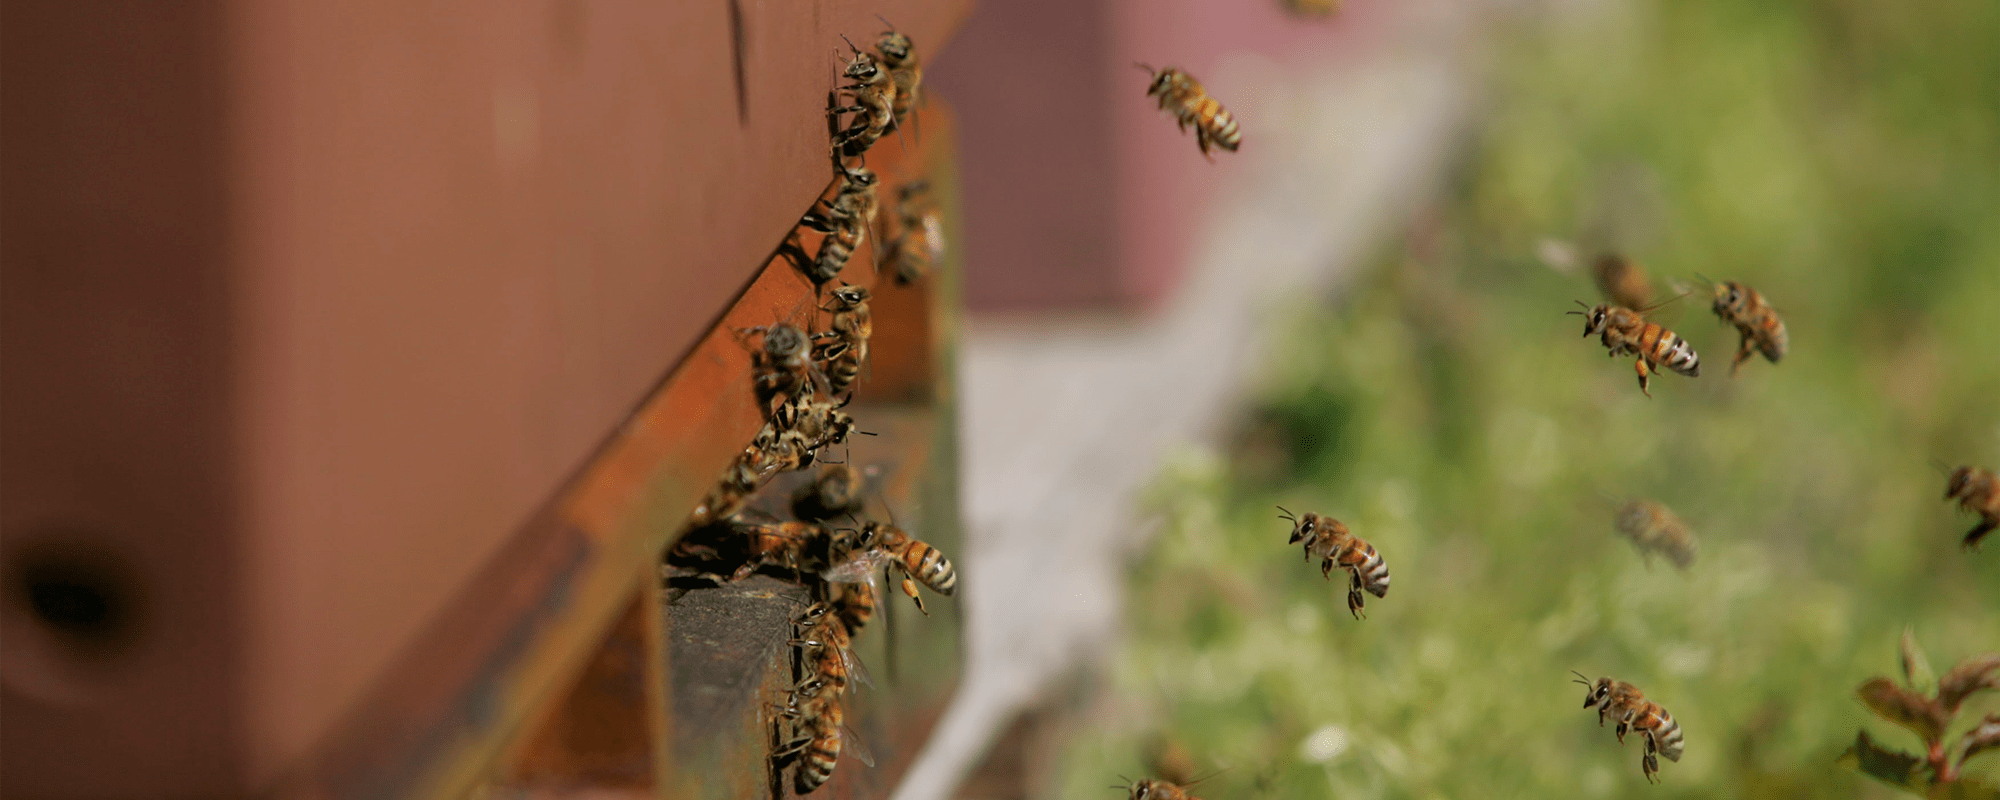 Bikasse med bier på plantagen